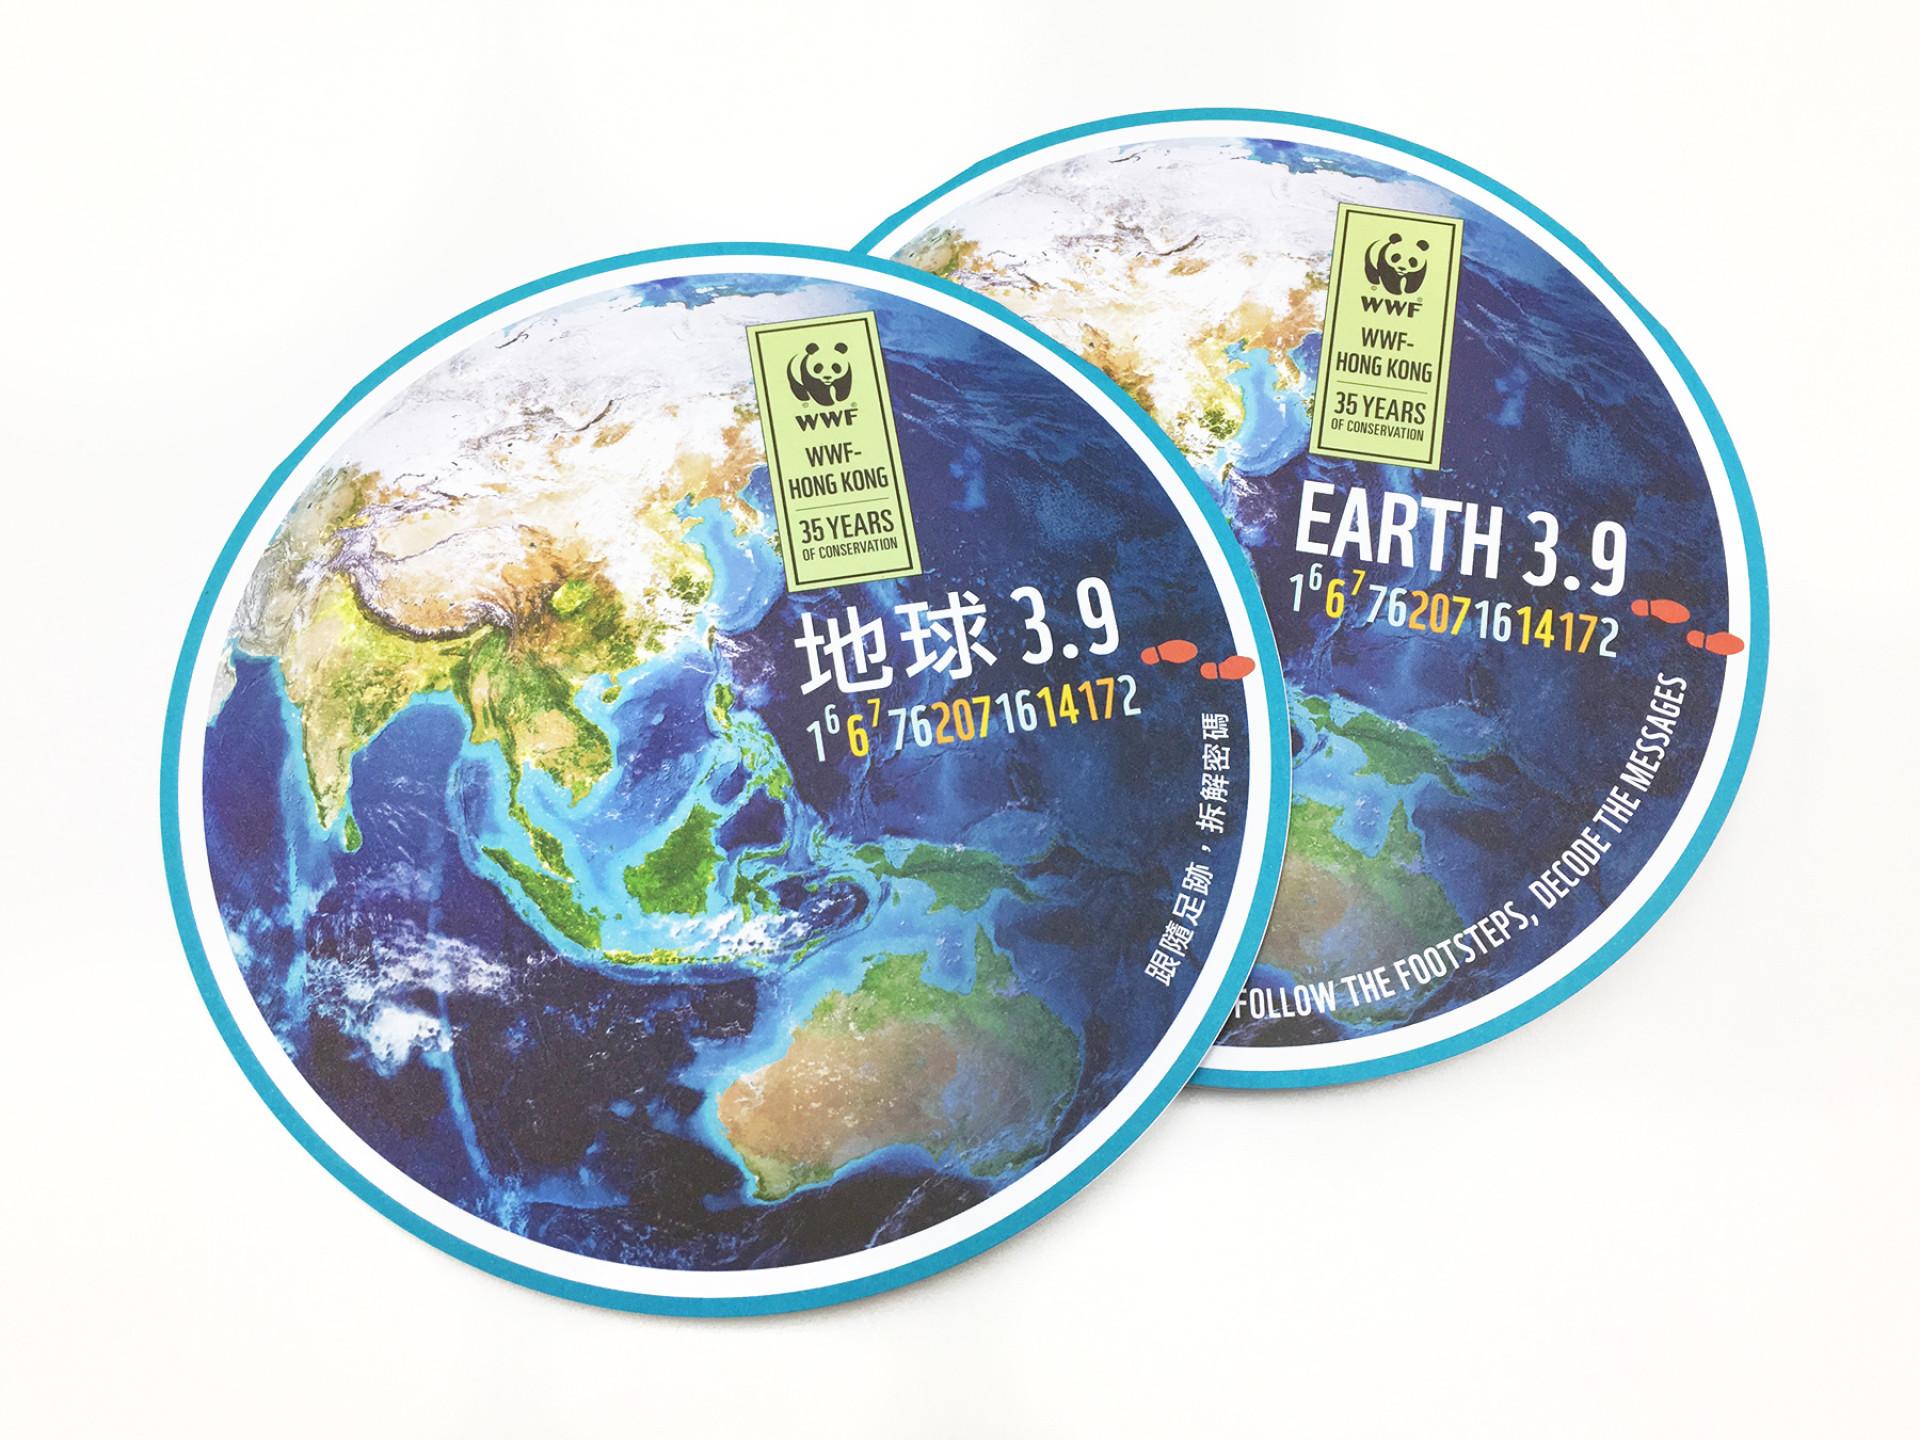 WWF 2016 Hong Kong's Ecological Footprint Report Design. Cranes